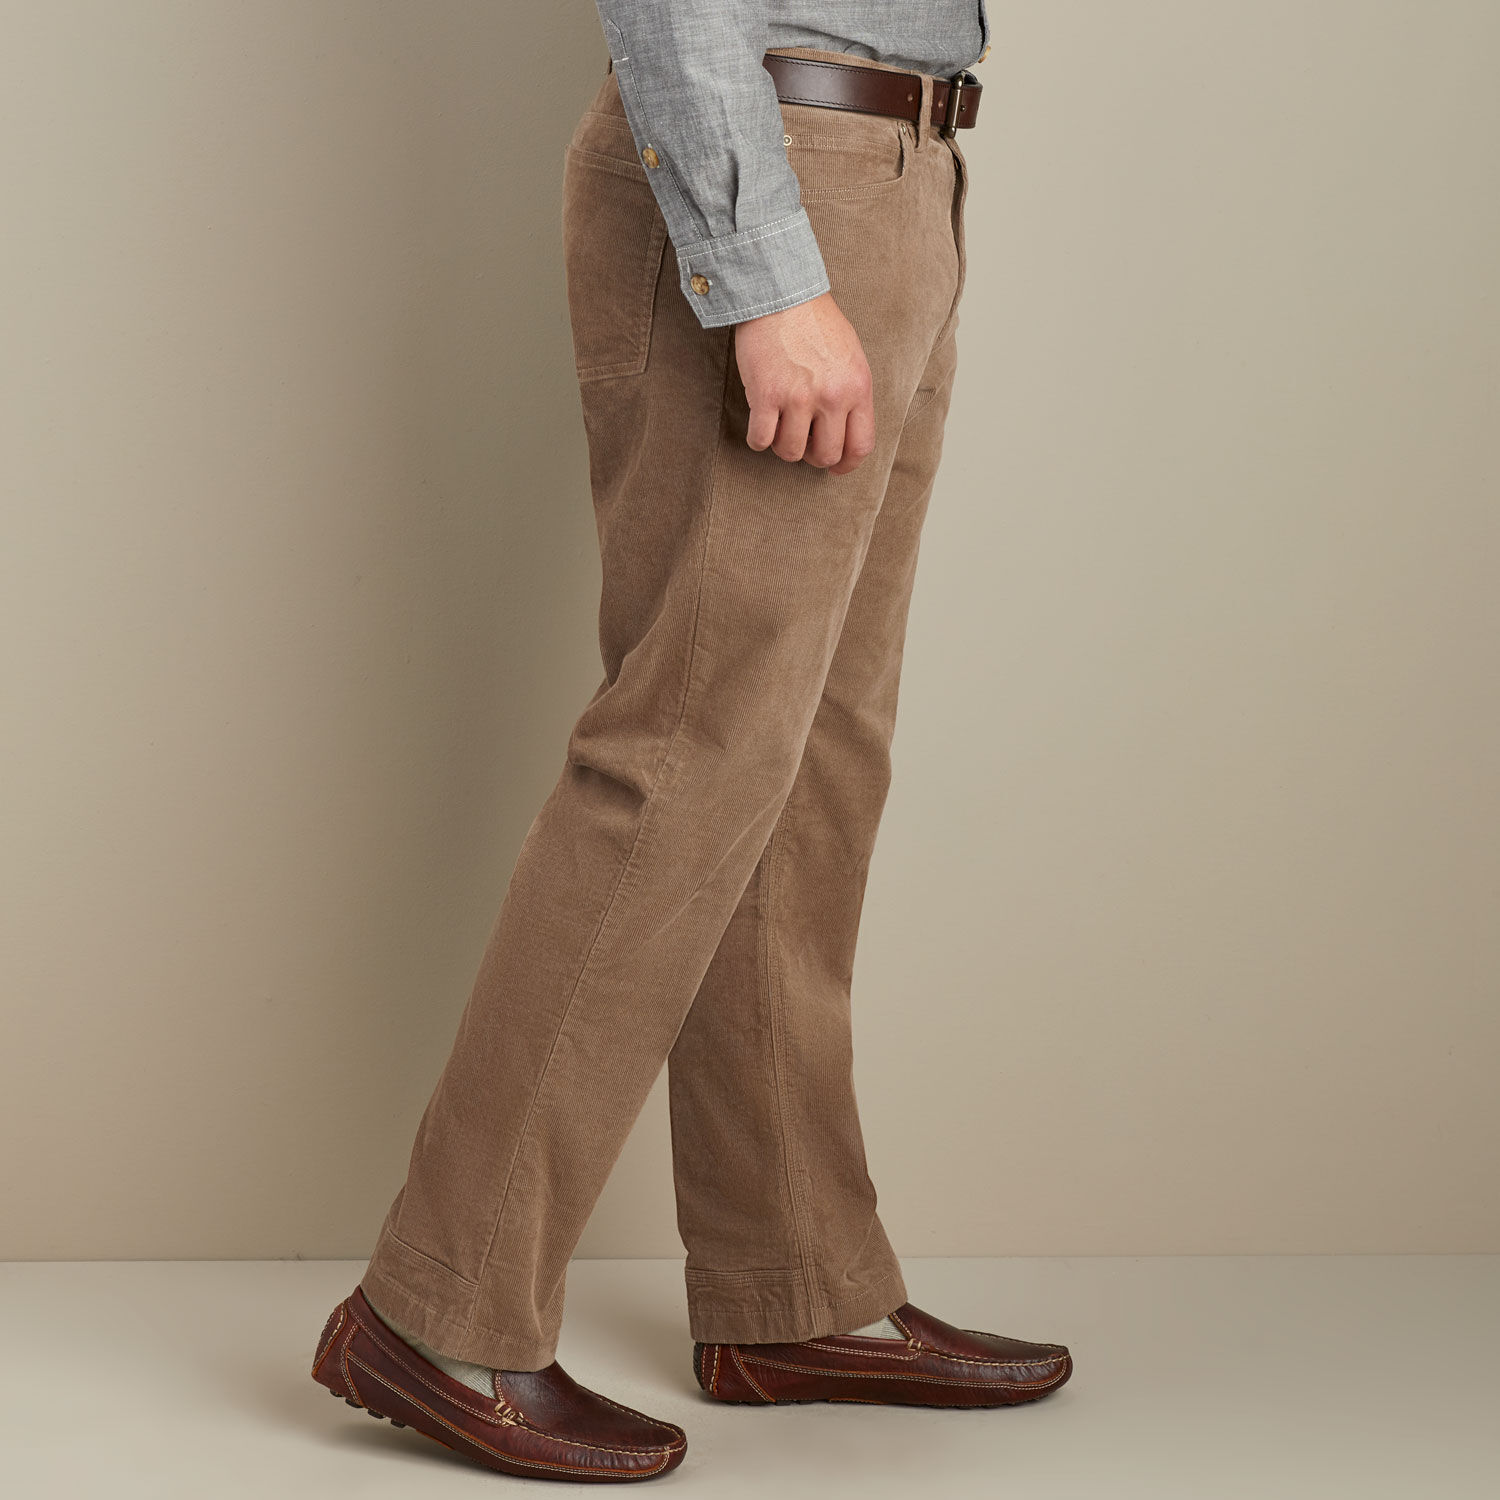 Amazon.com: LAUREN RALPH LAUREN Mens Pleated Cuffed Corduroy Pants 42x30  Chocolate Brown : ביגוד, נעליים ותכשיטים